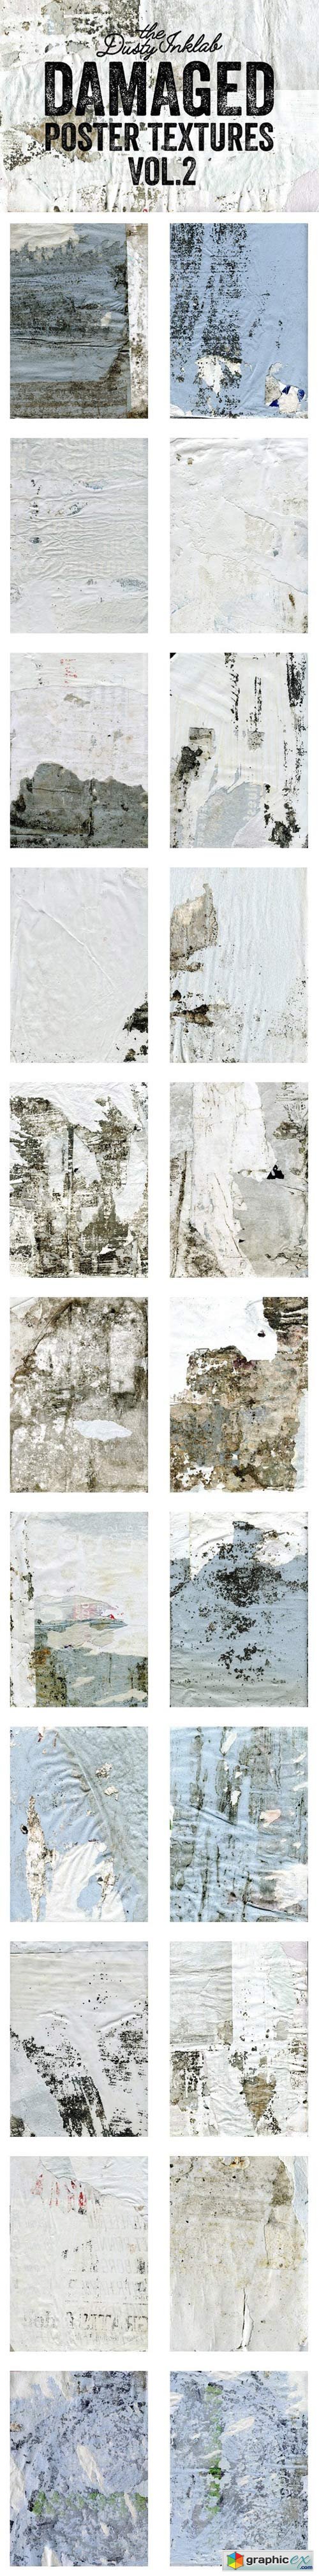 Damaged Poster Textures Vol. 2